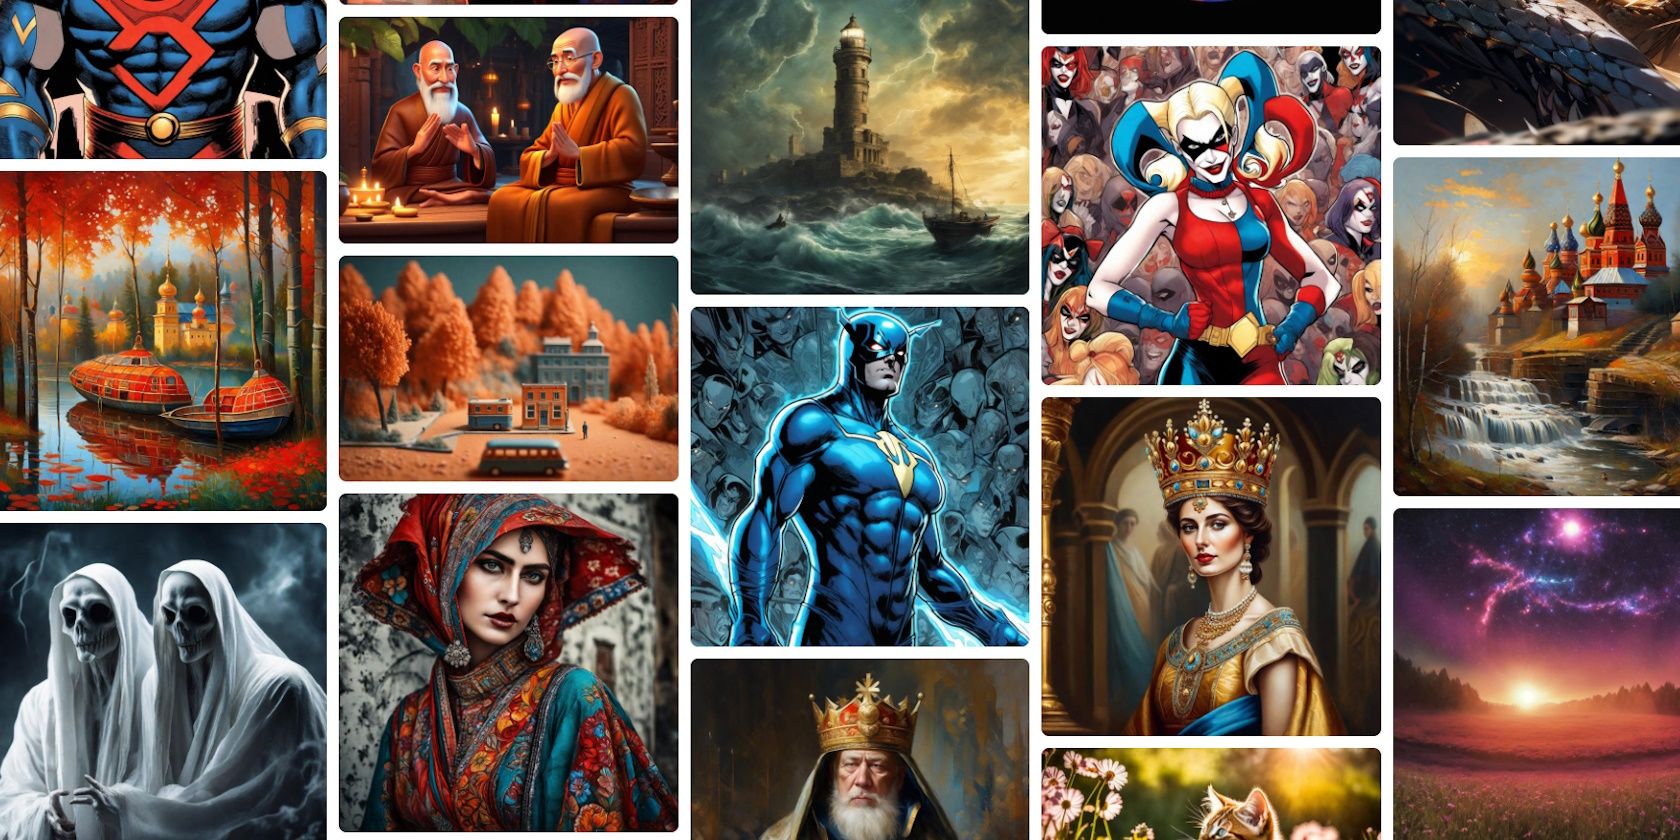 limewire studio homepage screenshot displaying lots of artwork